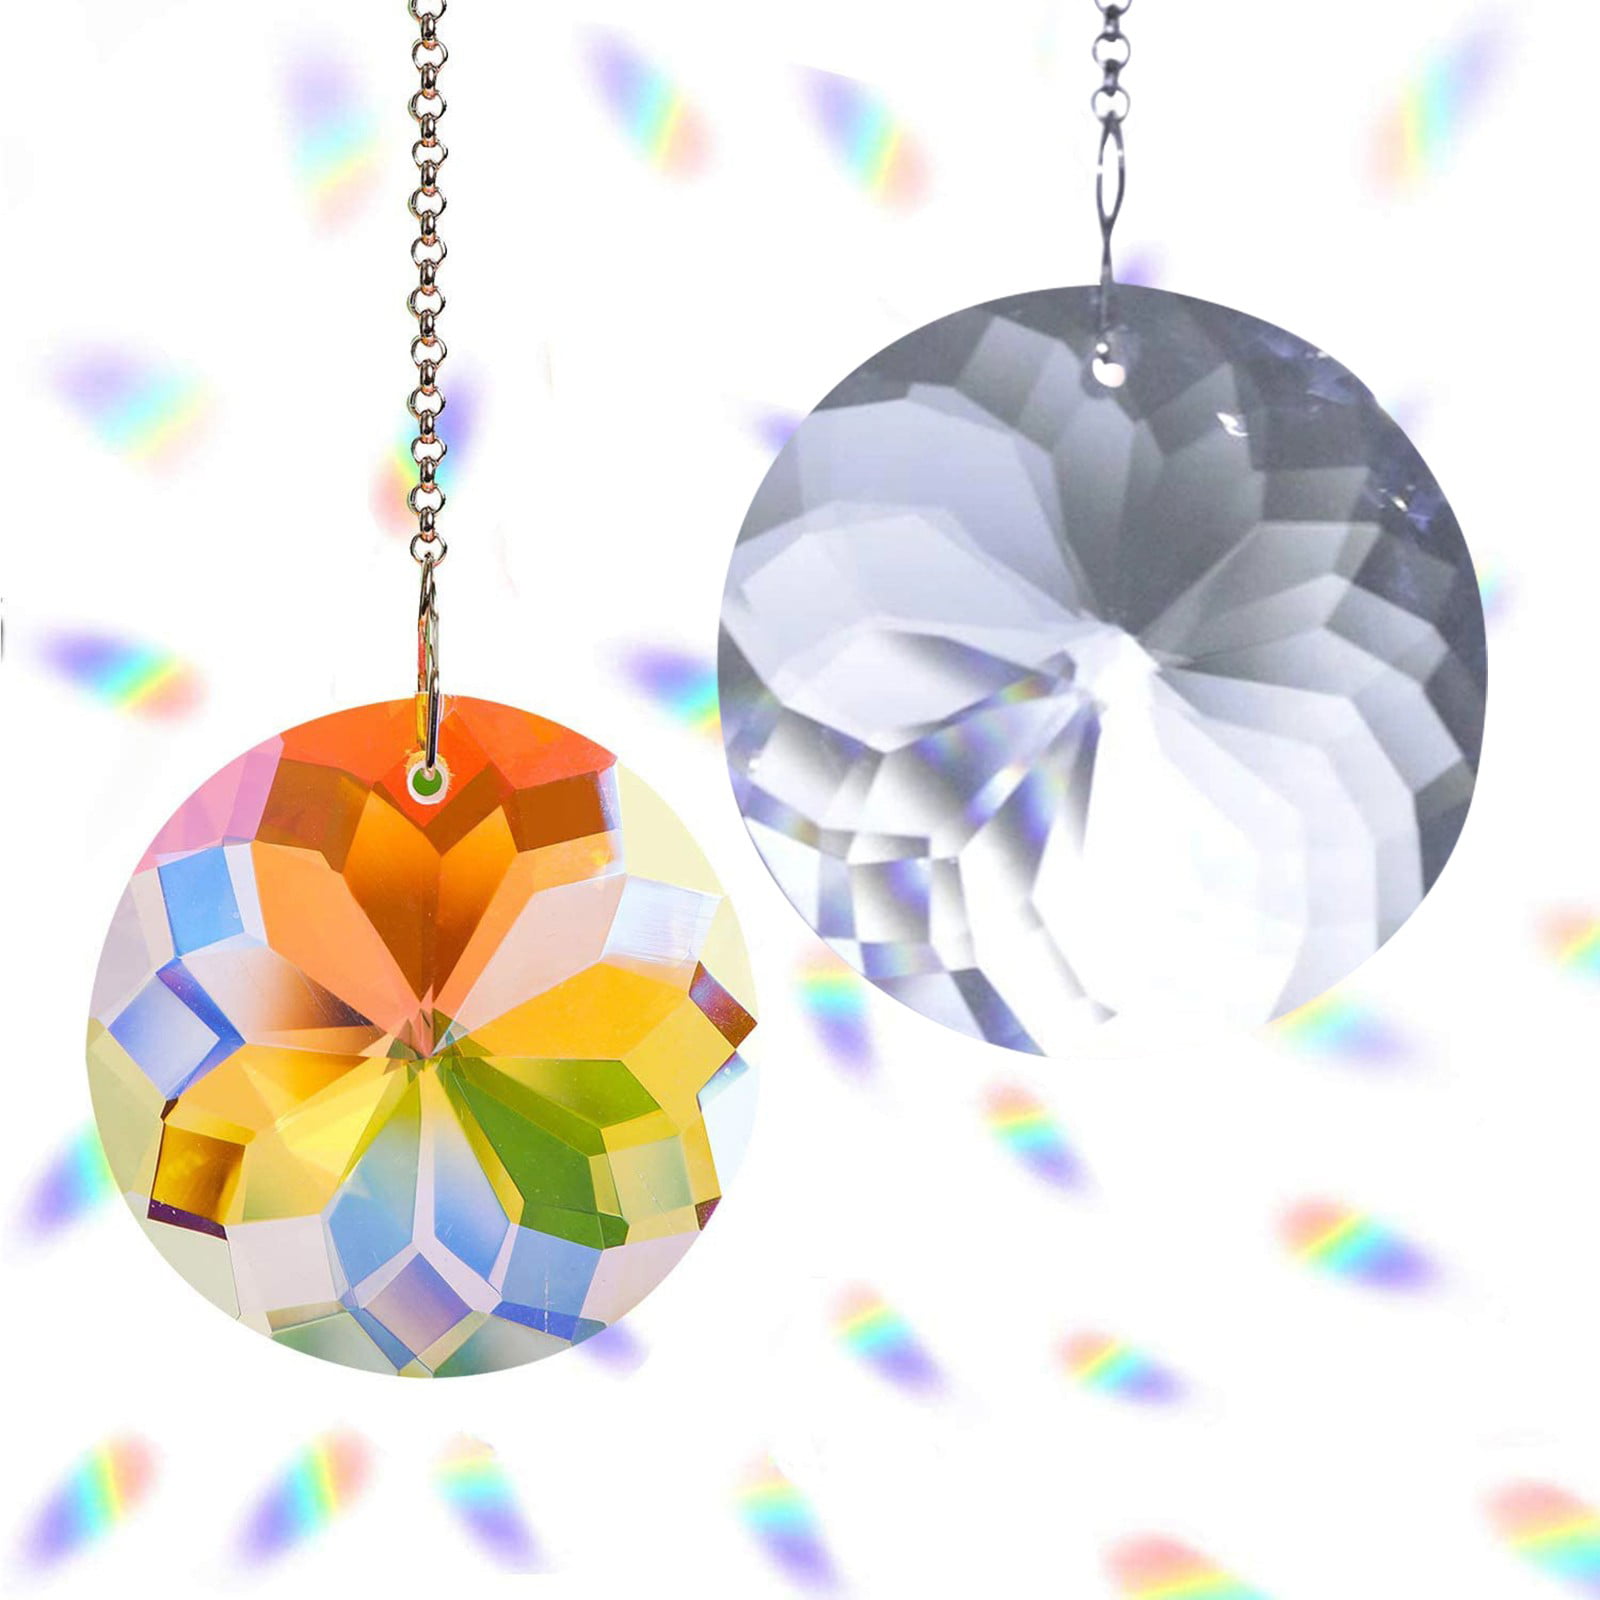 Details about   Crystals Suncatcher Prisms Lamp Hanging Ball Ornament Colorful Pendants Decor 